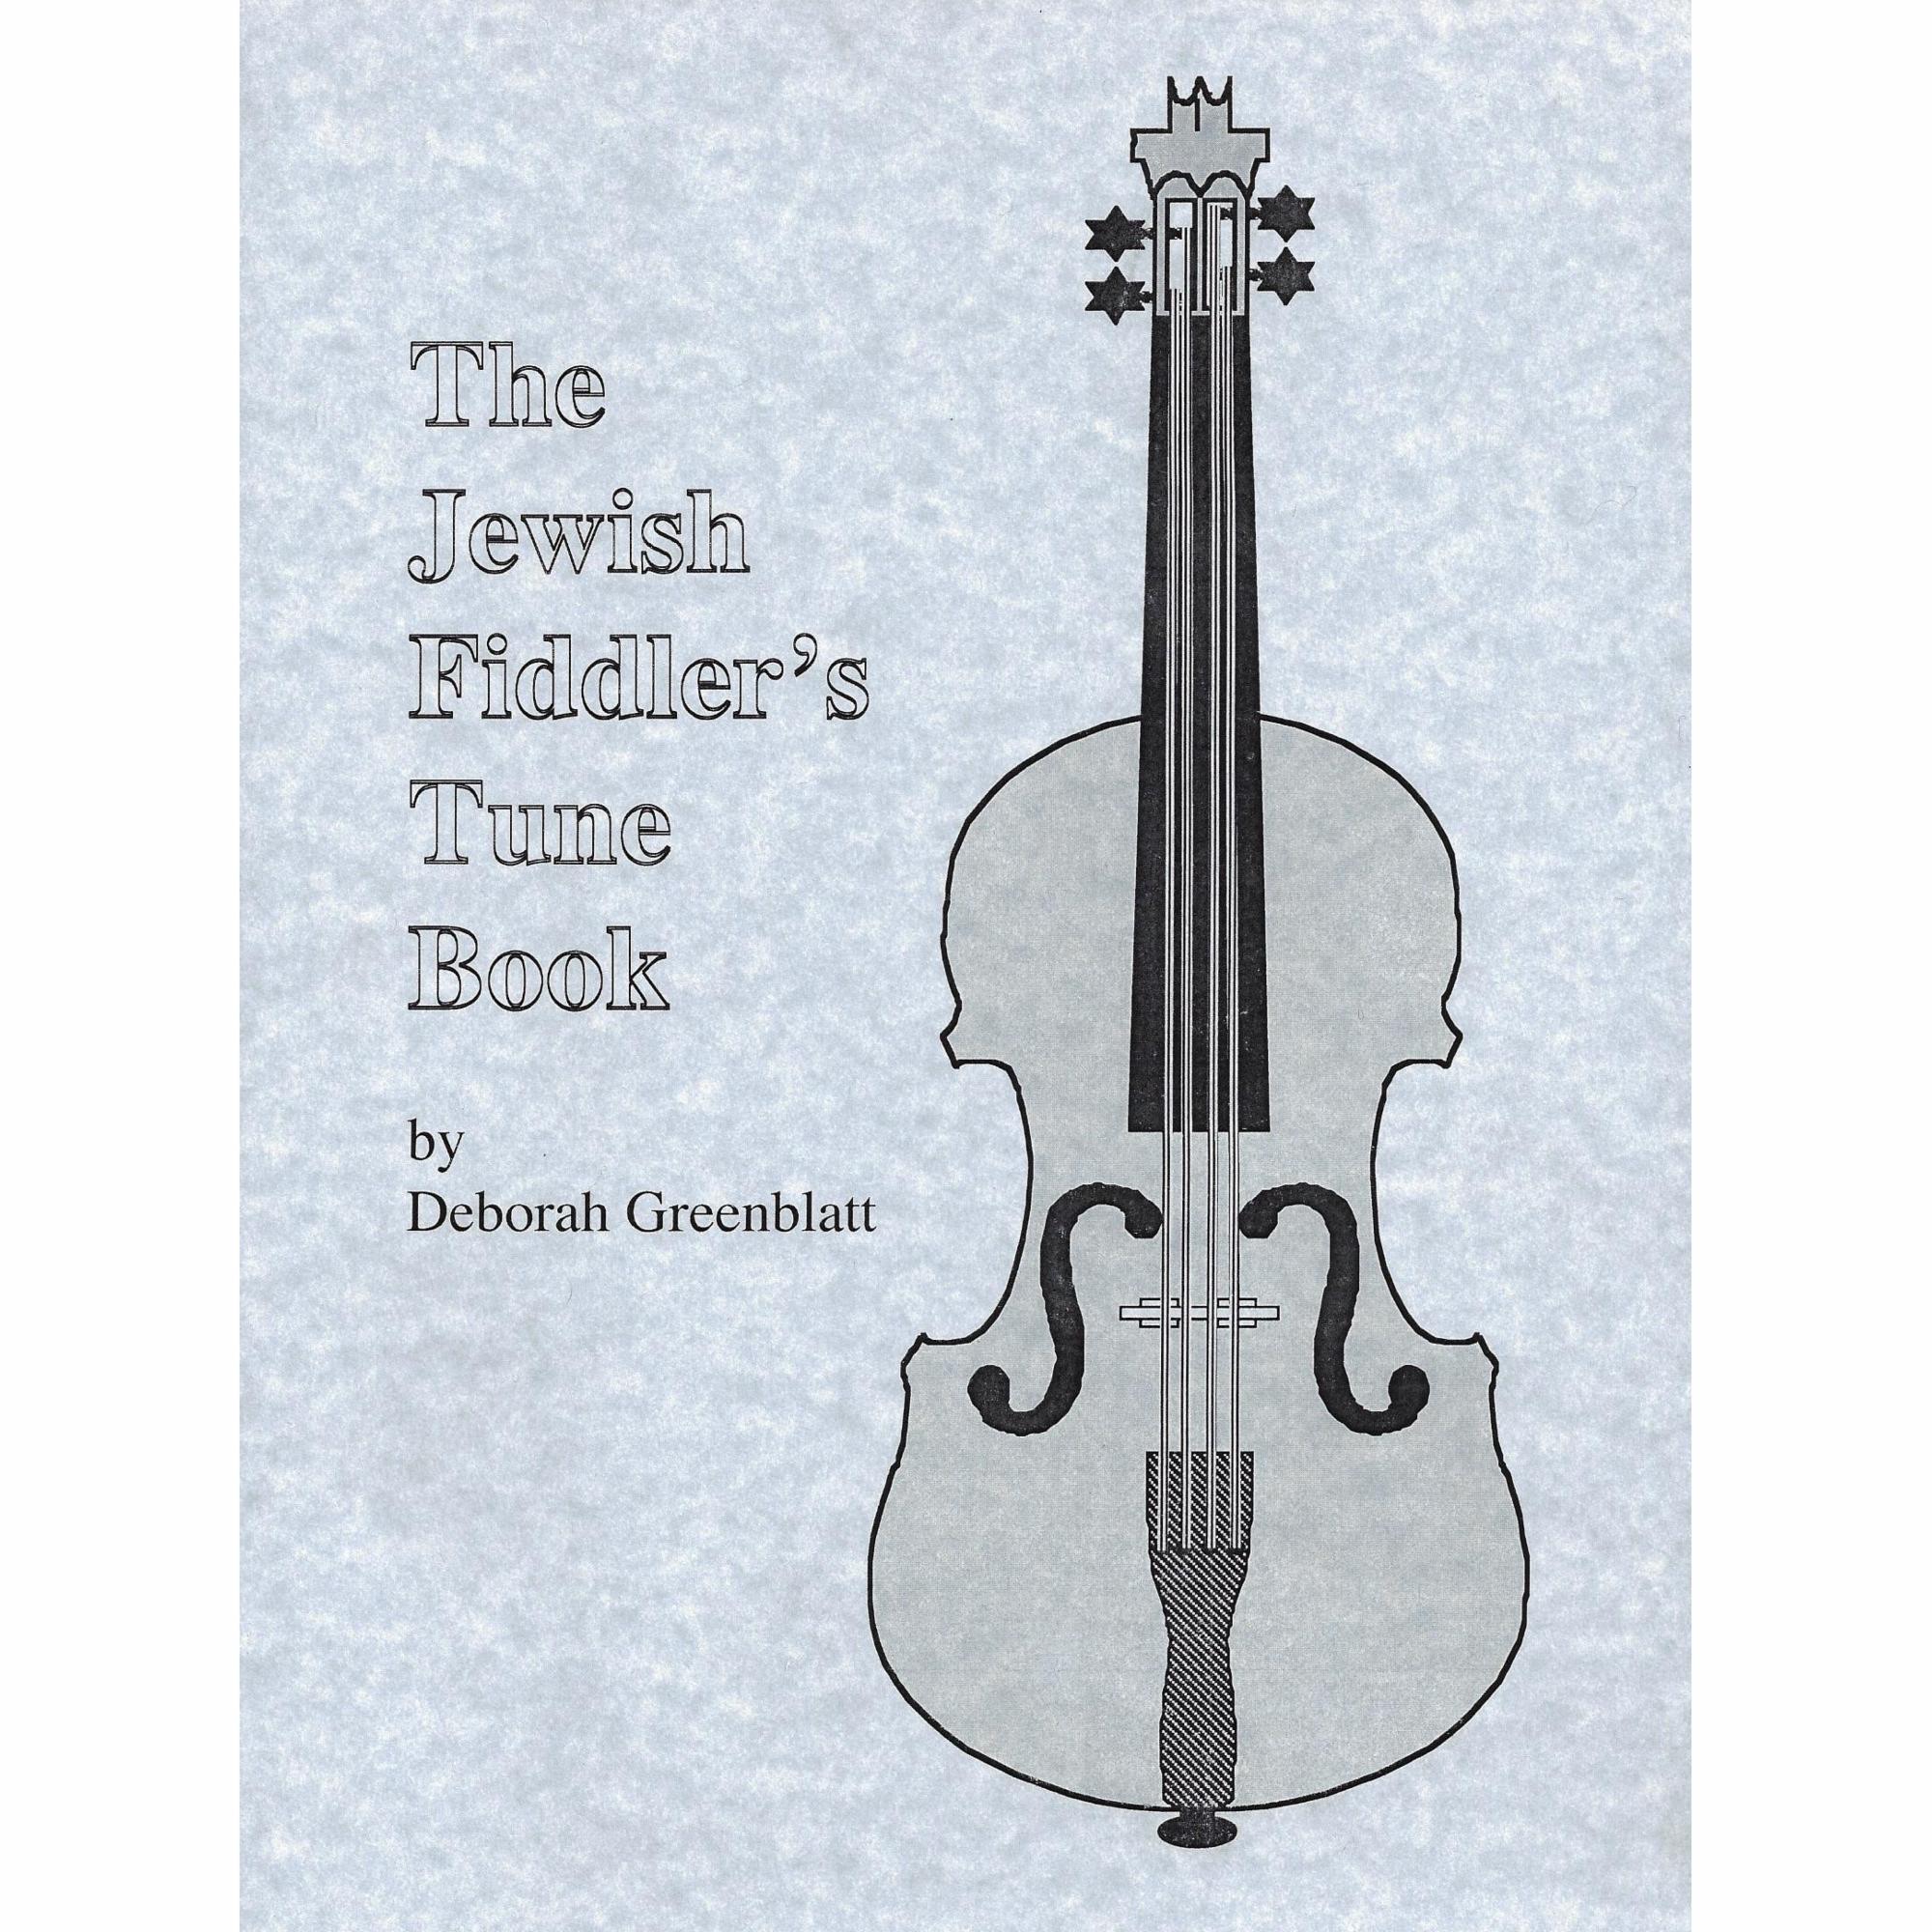 The Jewish Fiddler's Tune Book